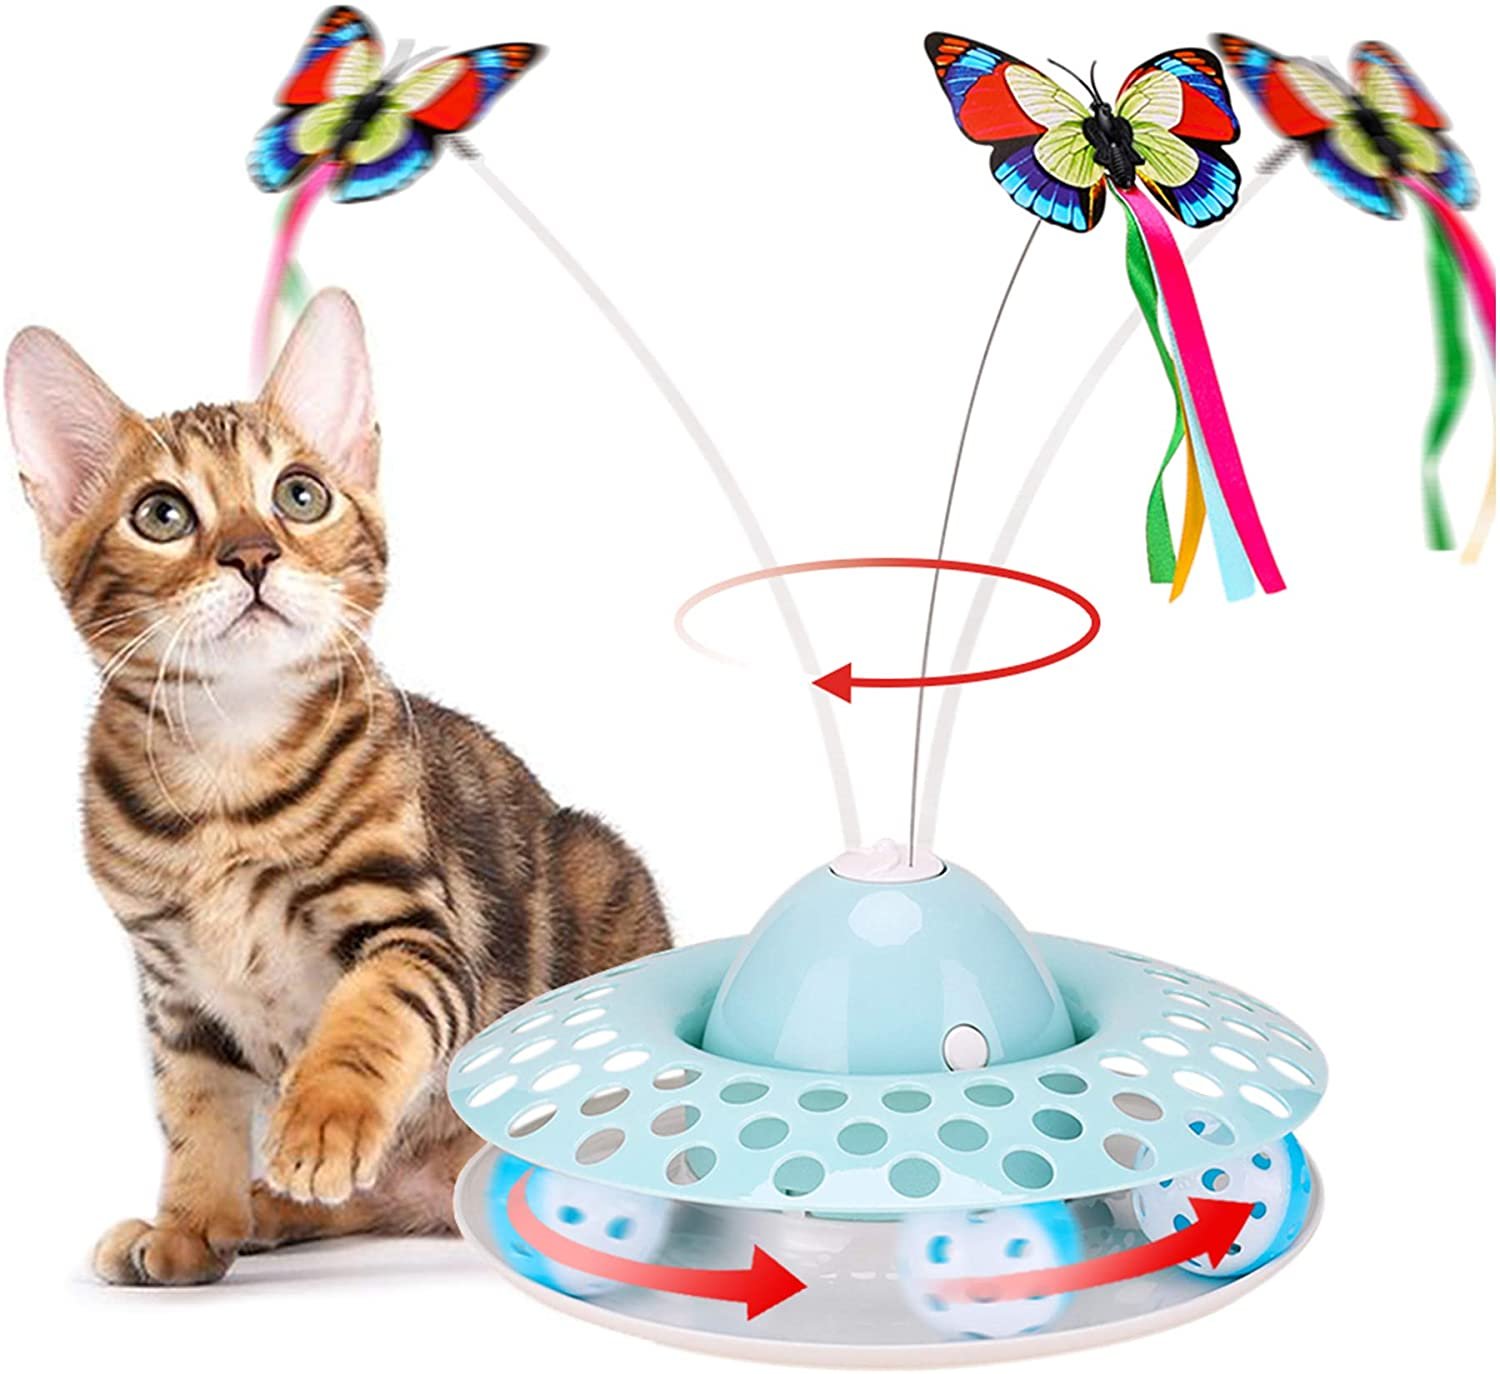 Rotating Butterfly & Ball Kitten Toy